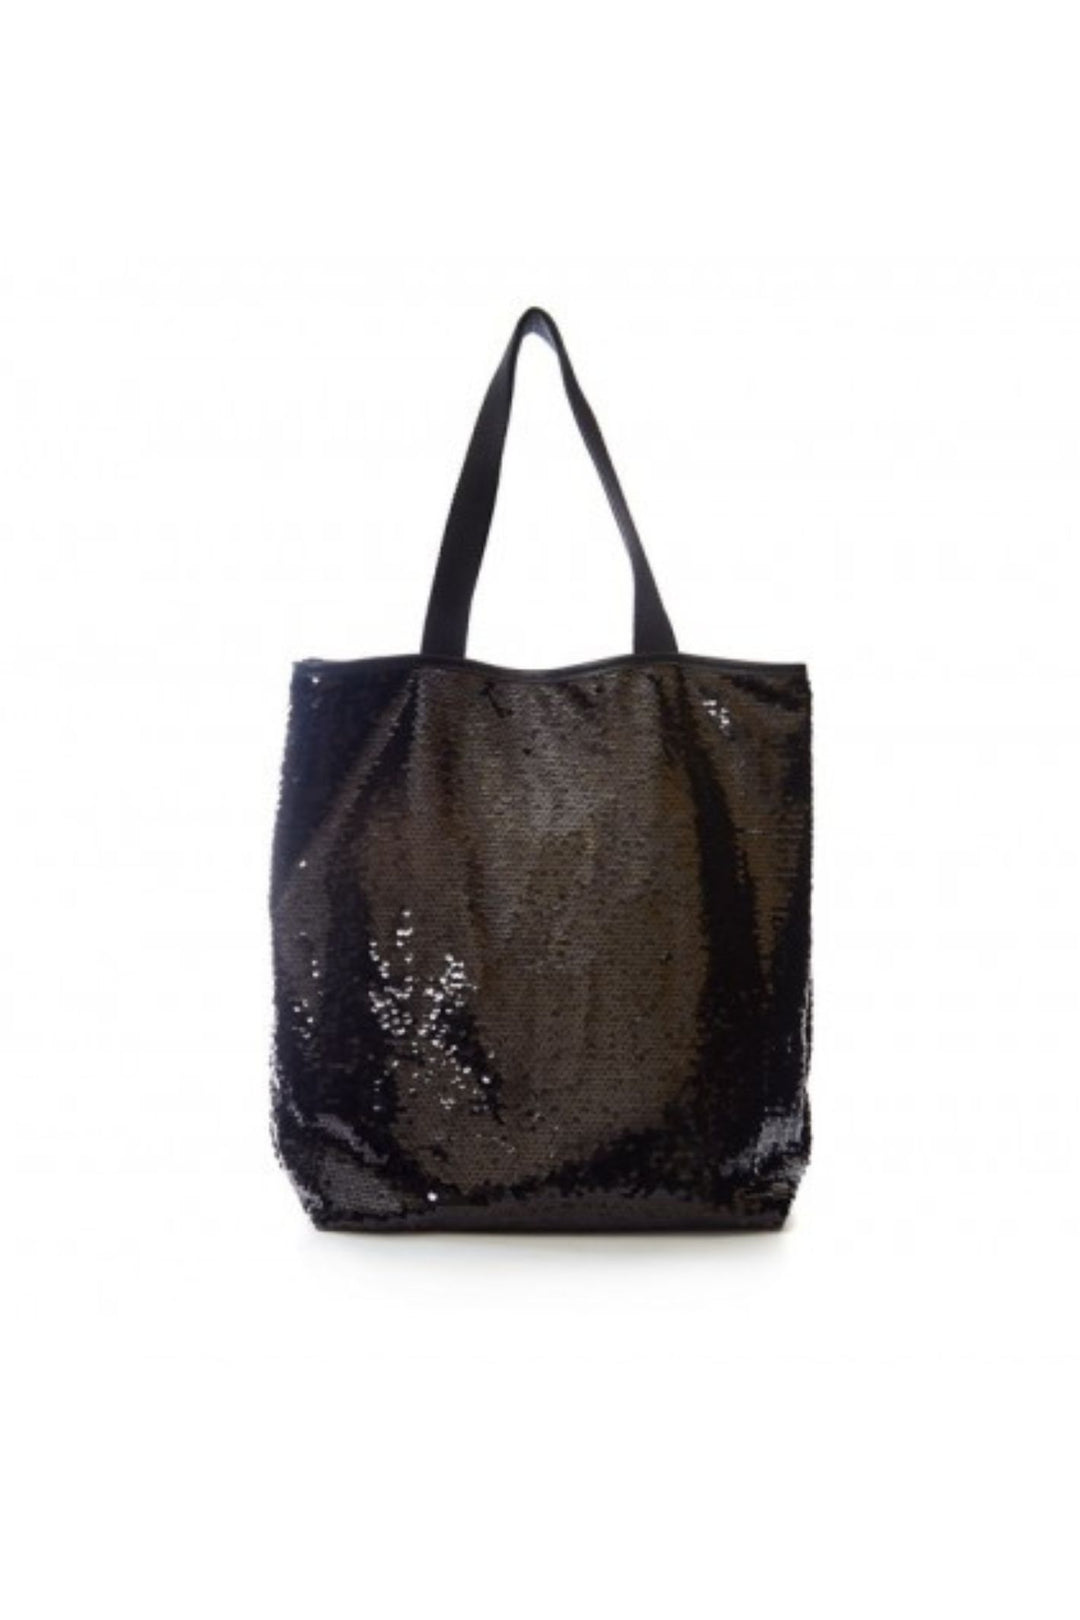 Malissa Black Sequin Shopper Bag